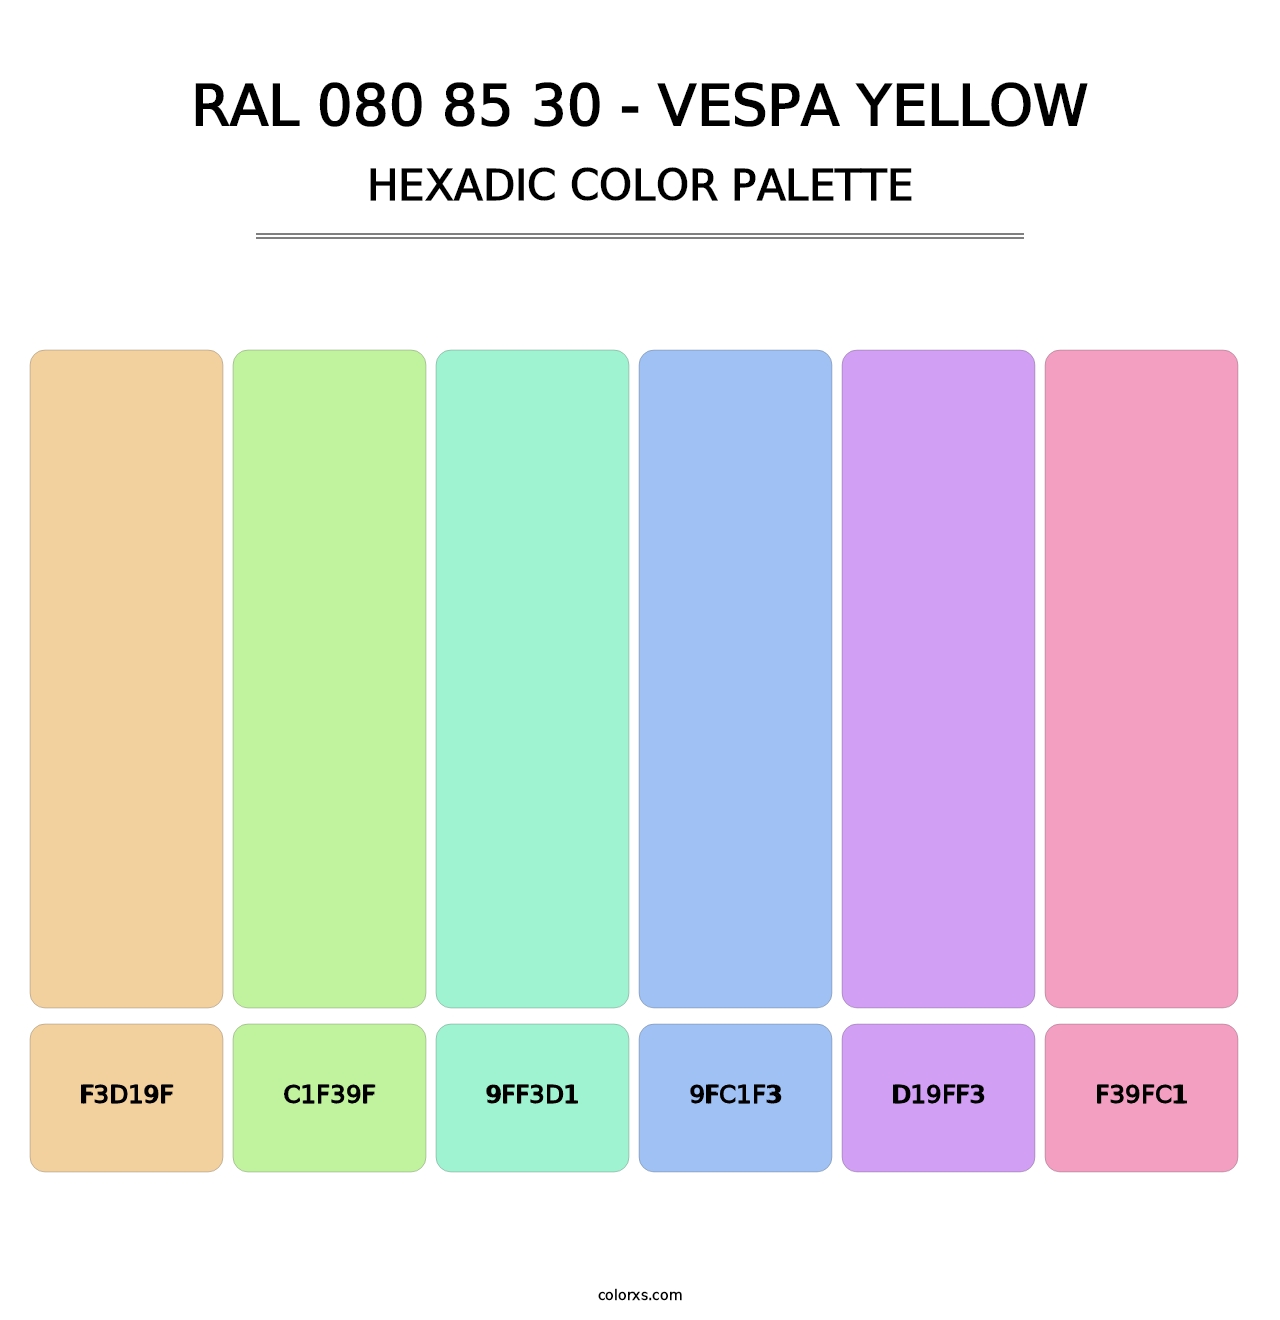 RAL 080 85 30 - Vespa Yellow - Hexadic Color Palette